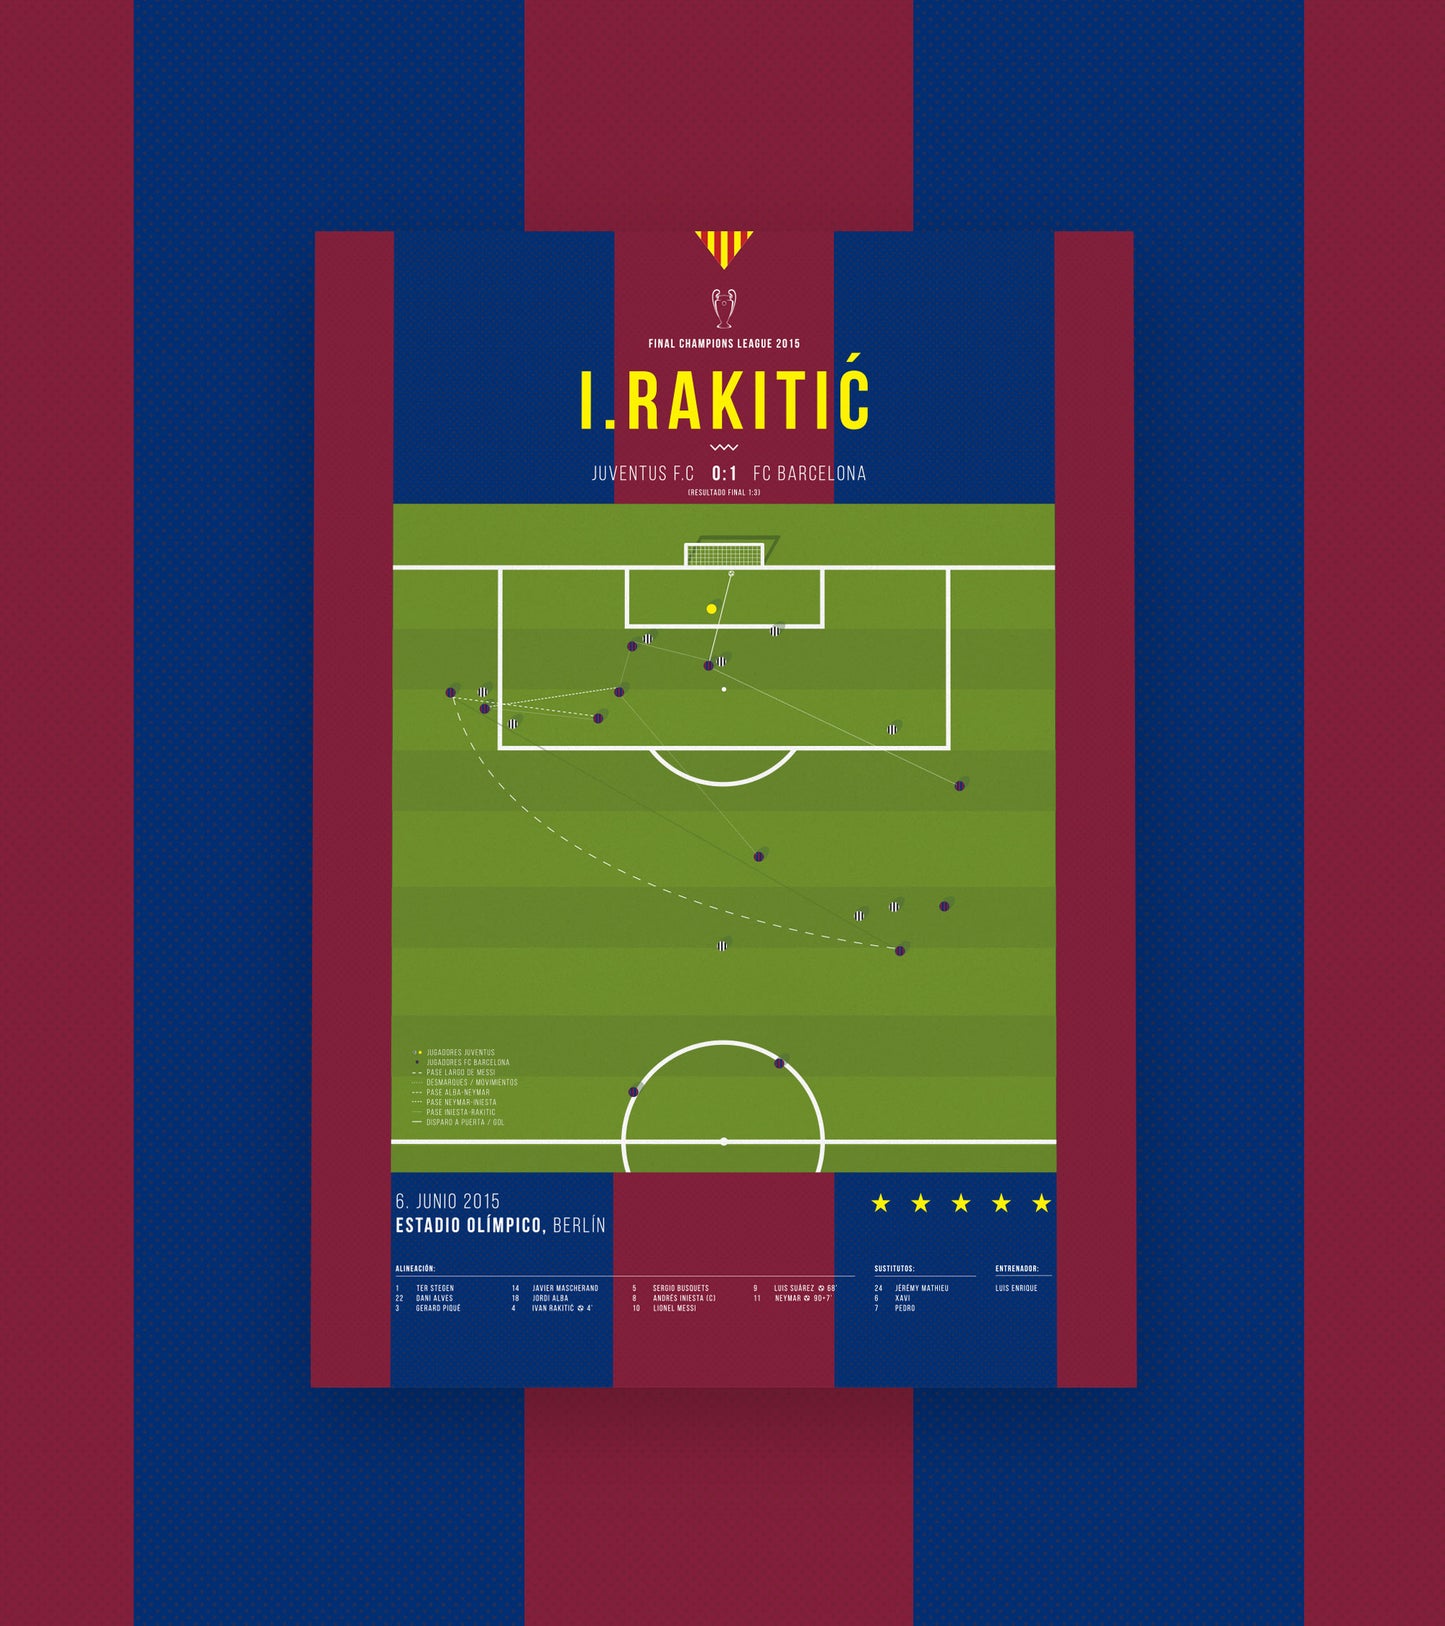 Rakitic opens the scoring in the Champions League final